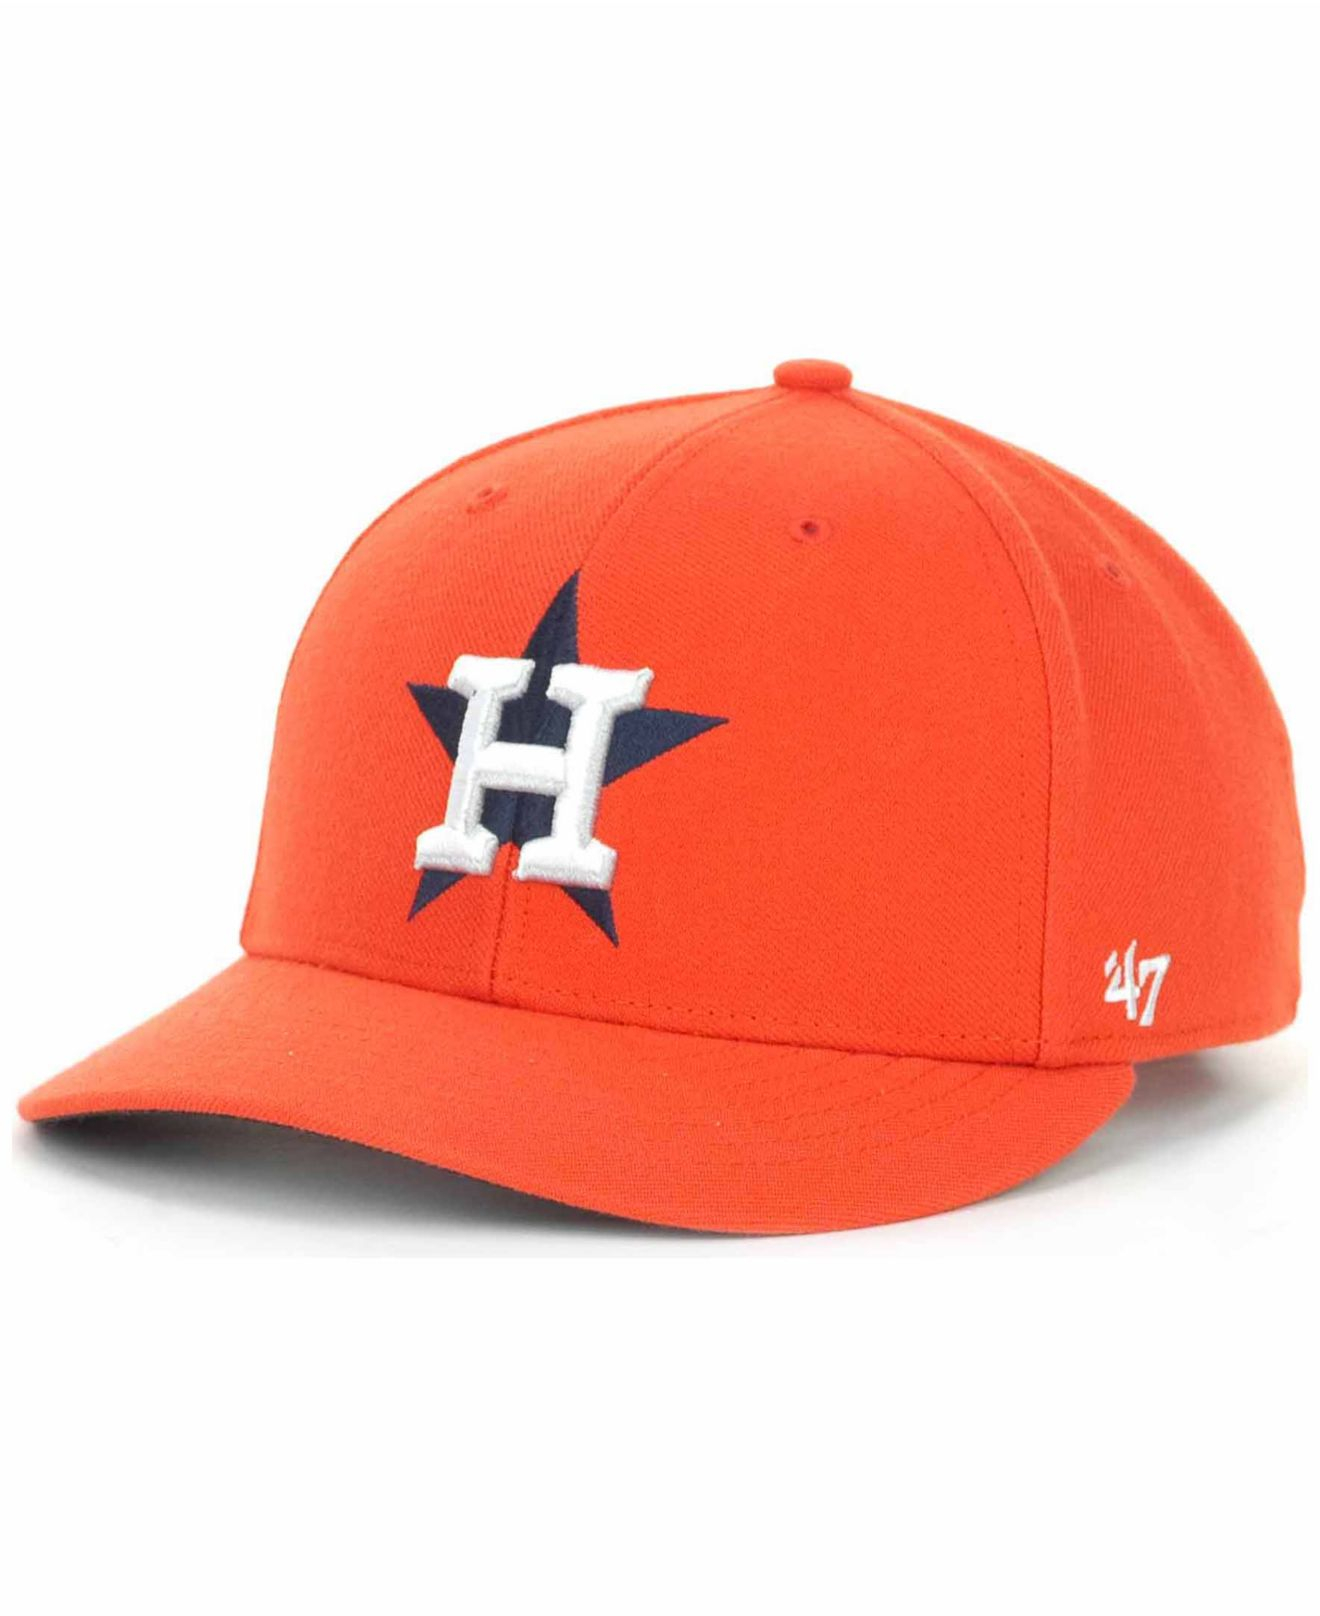 Lyst - 47 brand Houston Astros Mvp Cap in Orange for Men